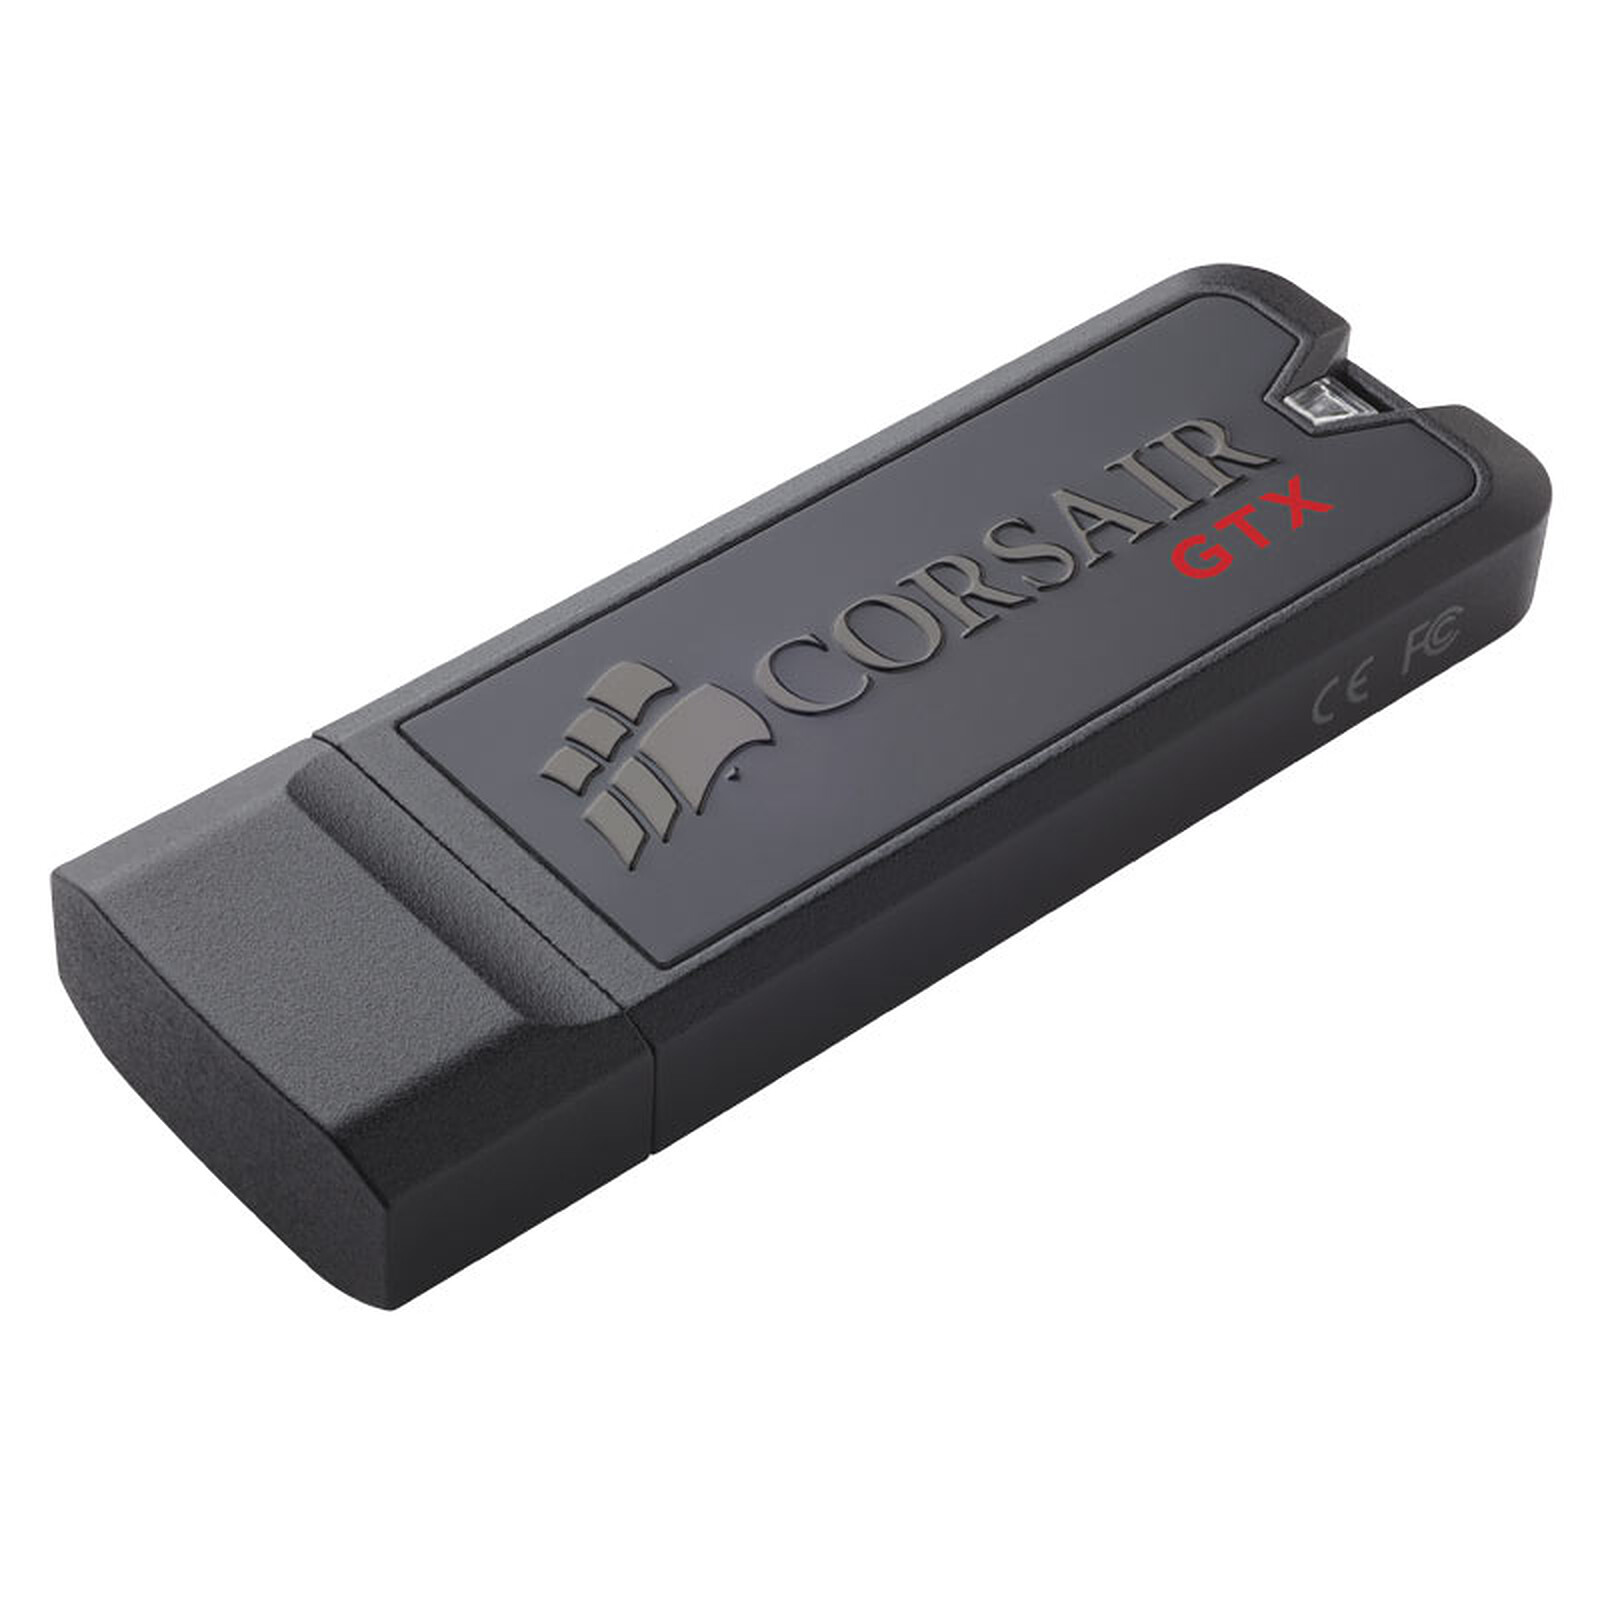 Flash Voyager GTX USB 3.1 1TB - USB flash drive Corsair on LDLC